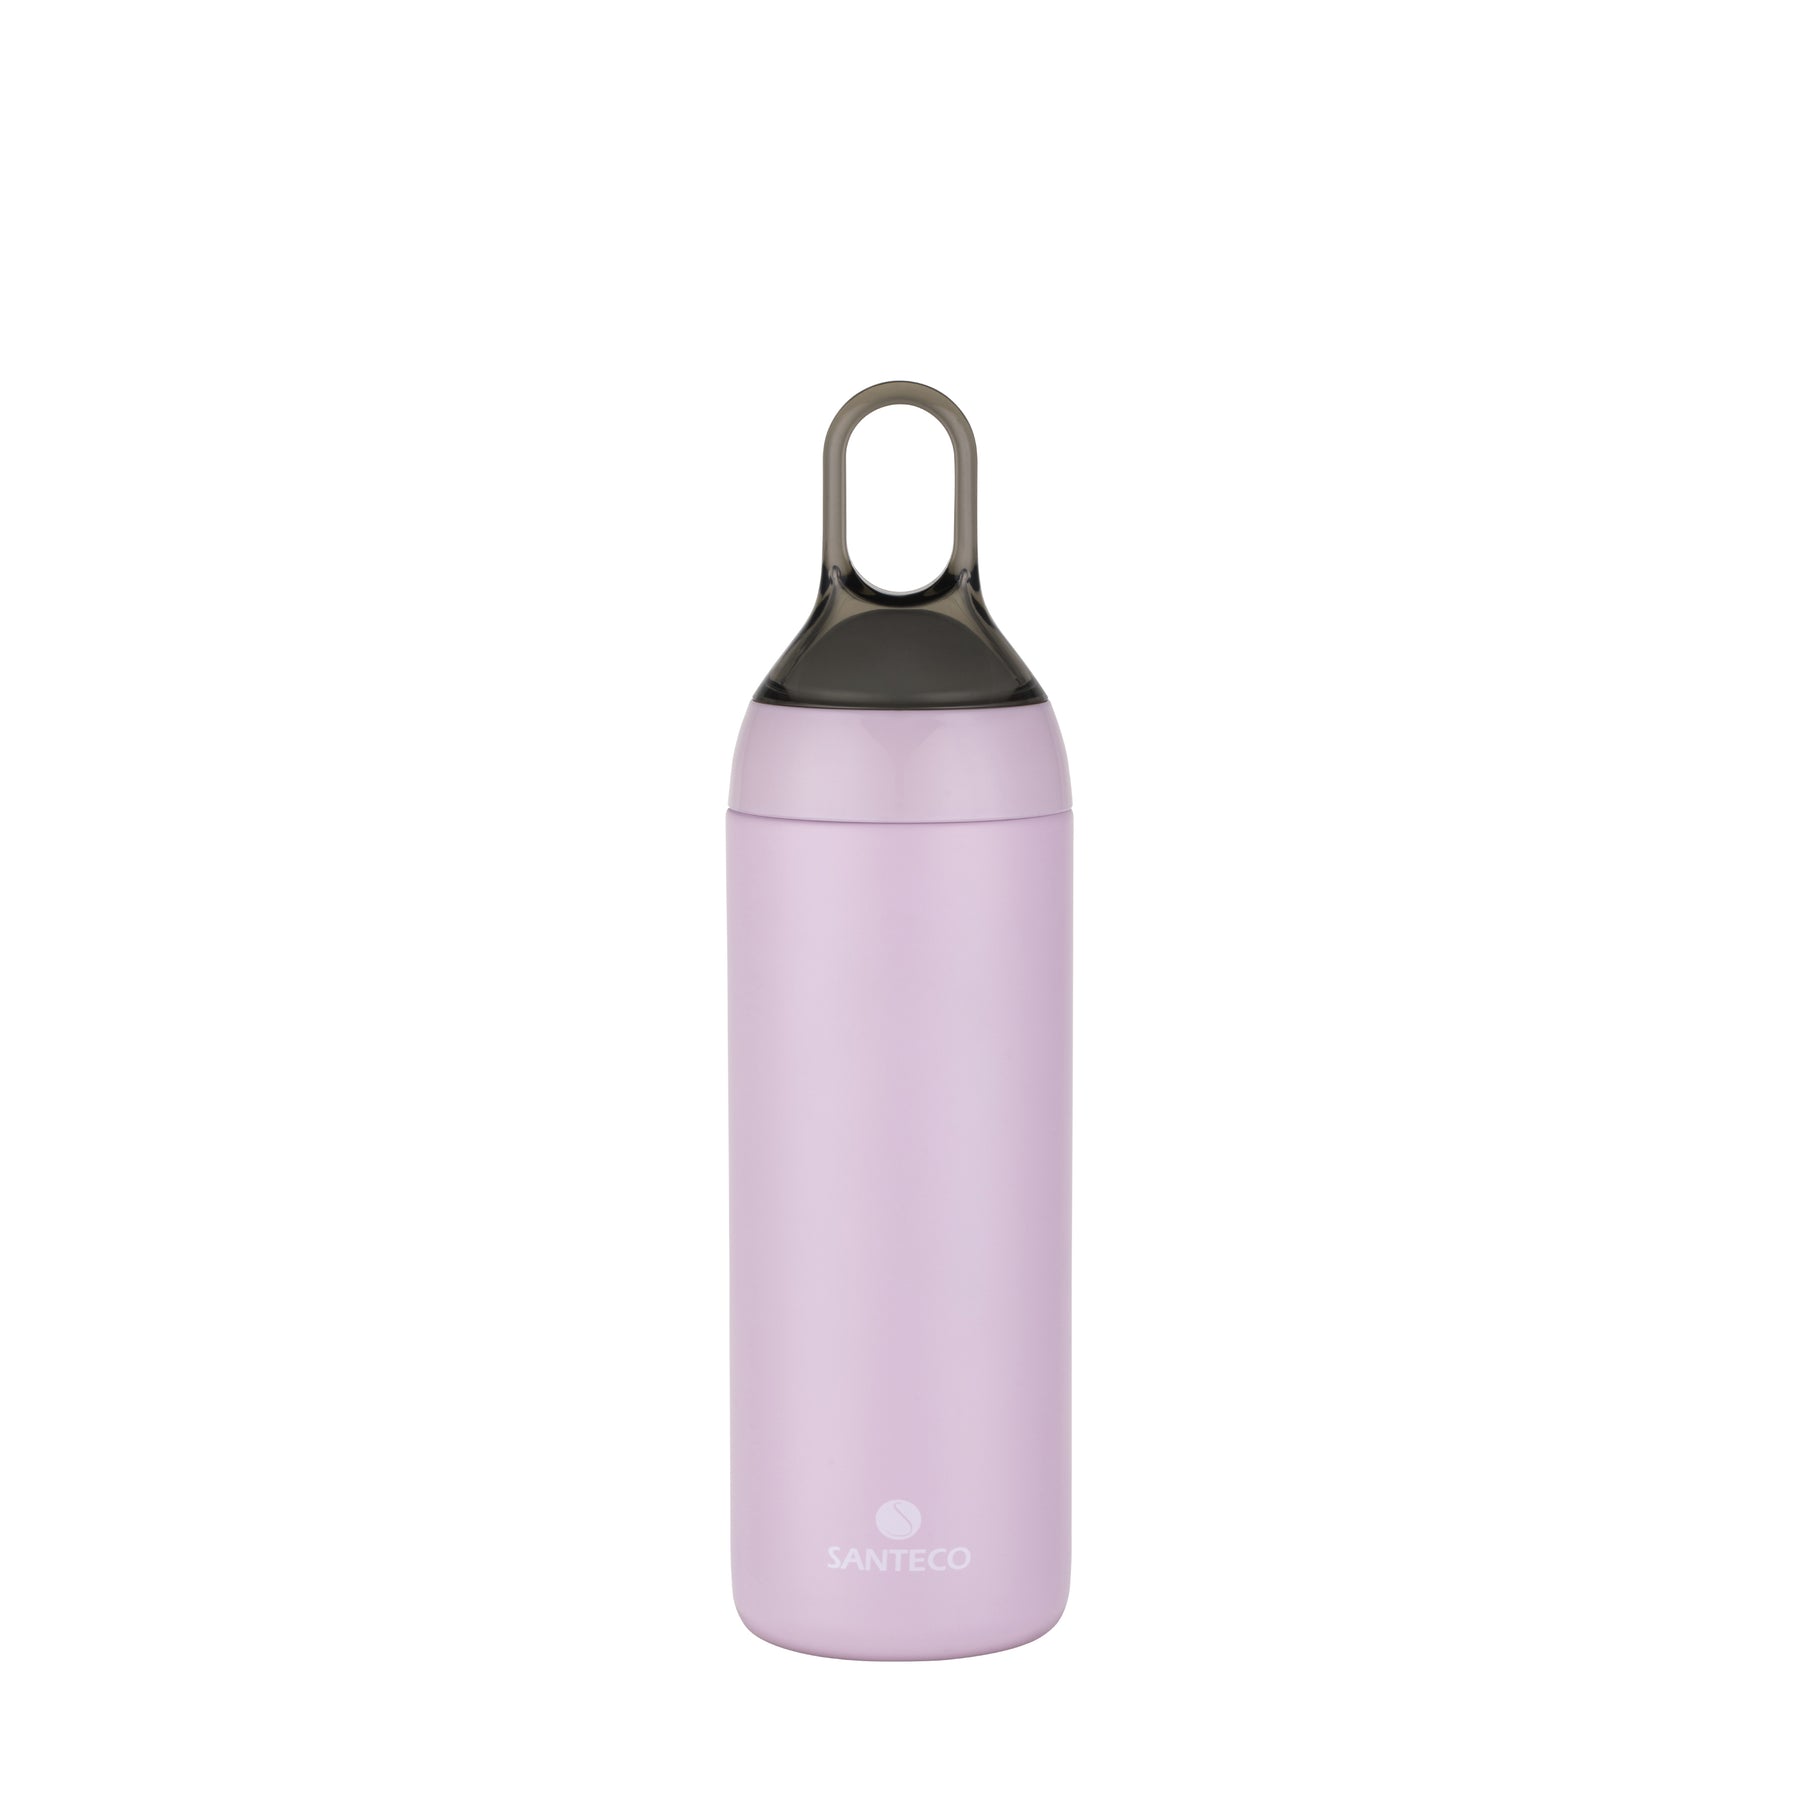 SANTECO Yoga Bottle, 17 oz, Stainless Steel, Vacuum Insulated